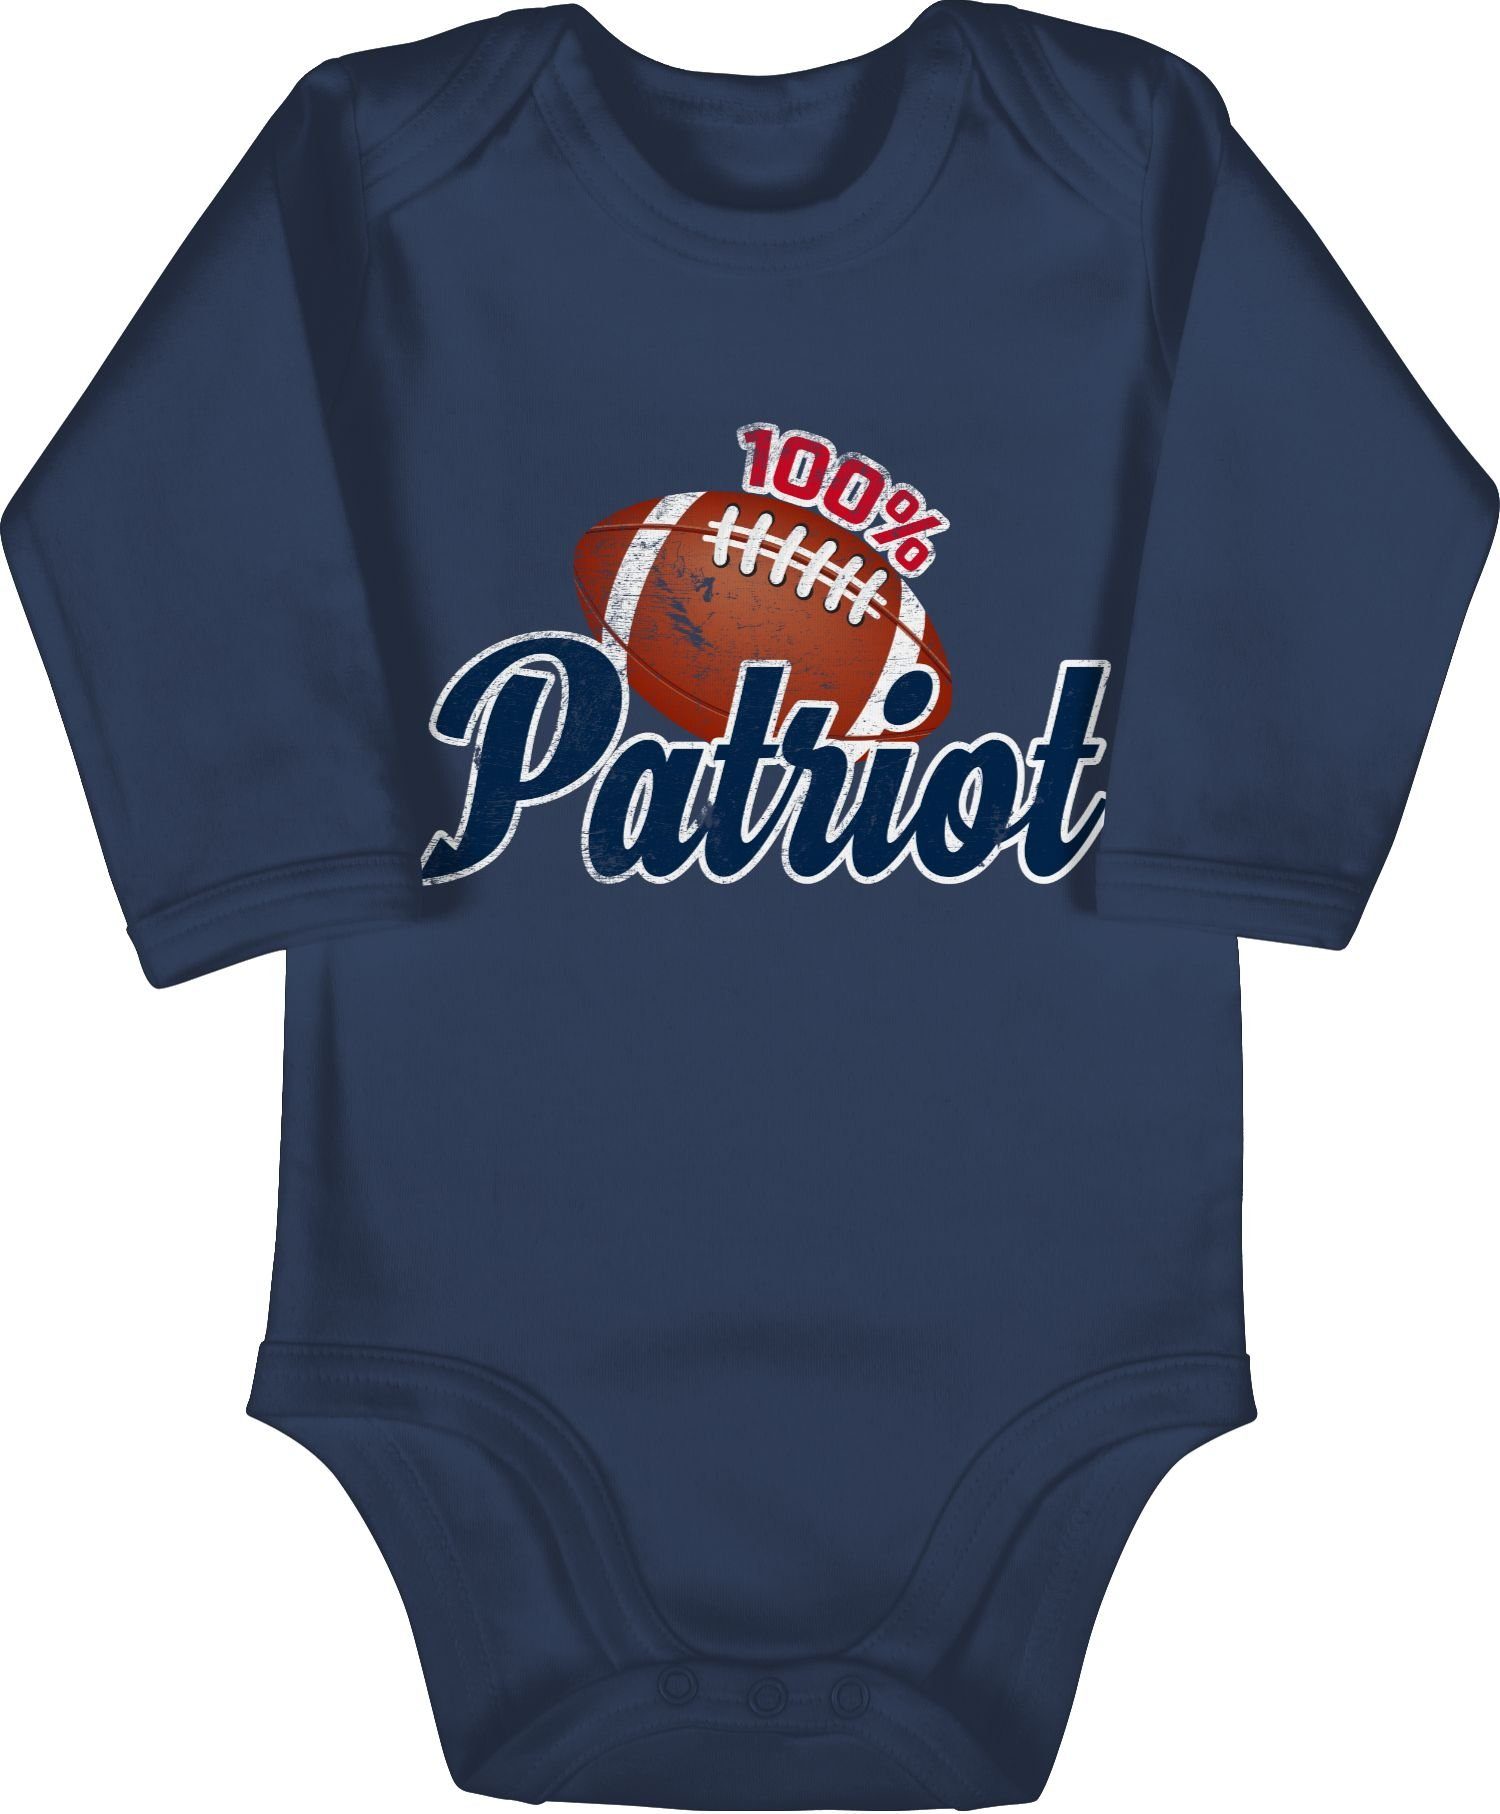 Shirtracer Shirtbody 100% Patriot - Sport & Bewegung Baby - Bio Baby  Strampler langarm baby american football - strampler - geschenk für babys -  babybodie